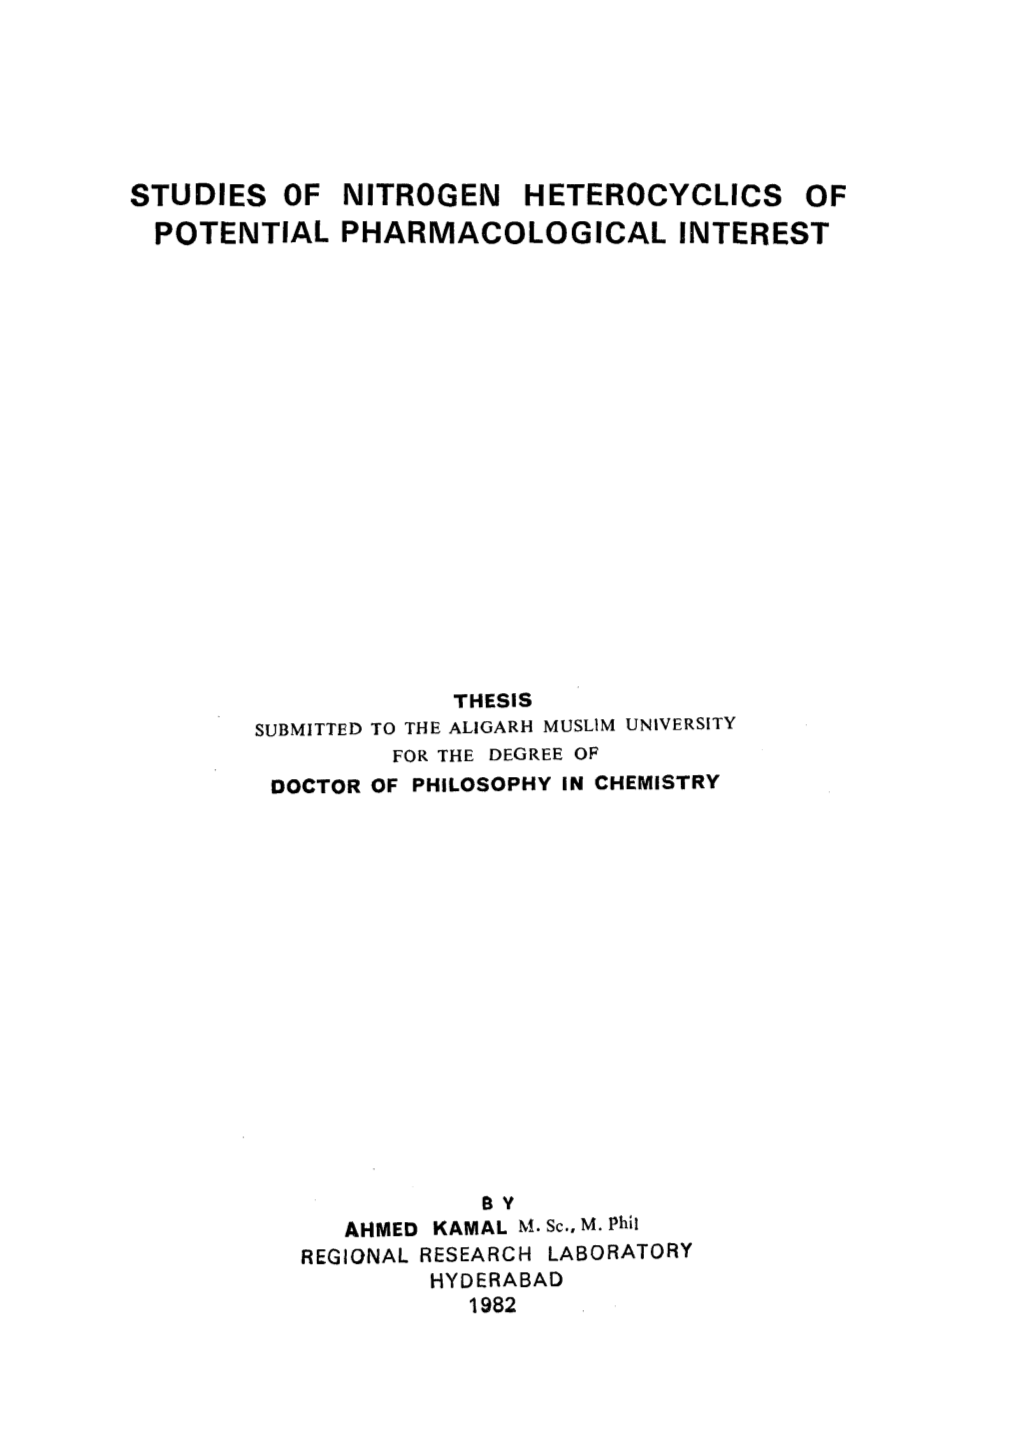 Studies of Nitrogen Heterocyclics of Potential Pharmacological Interest